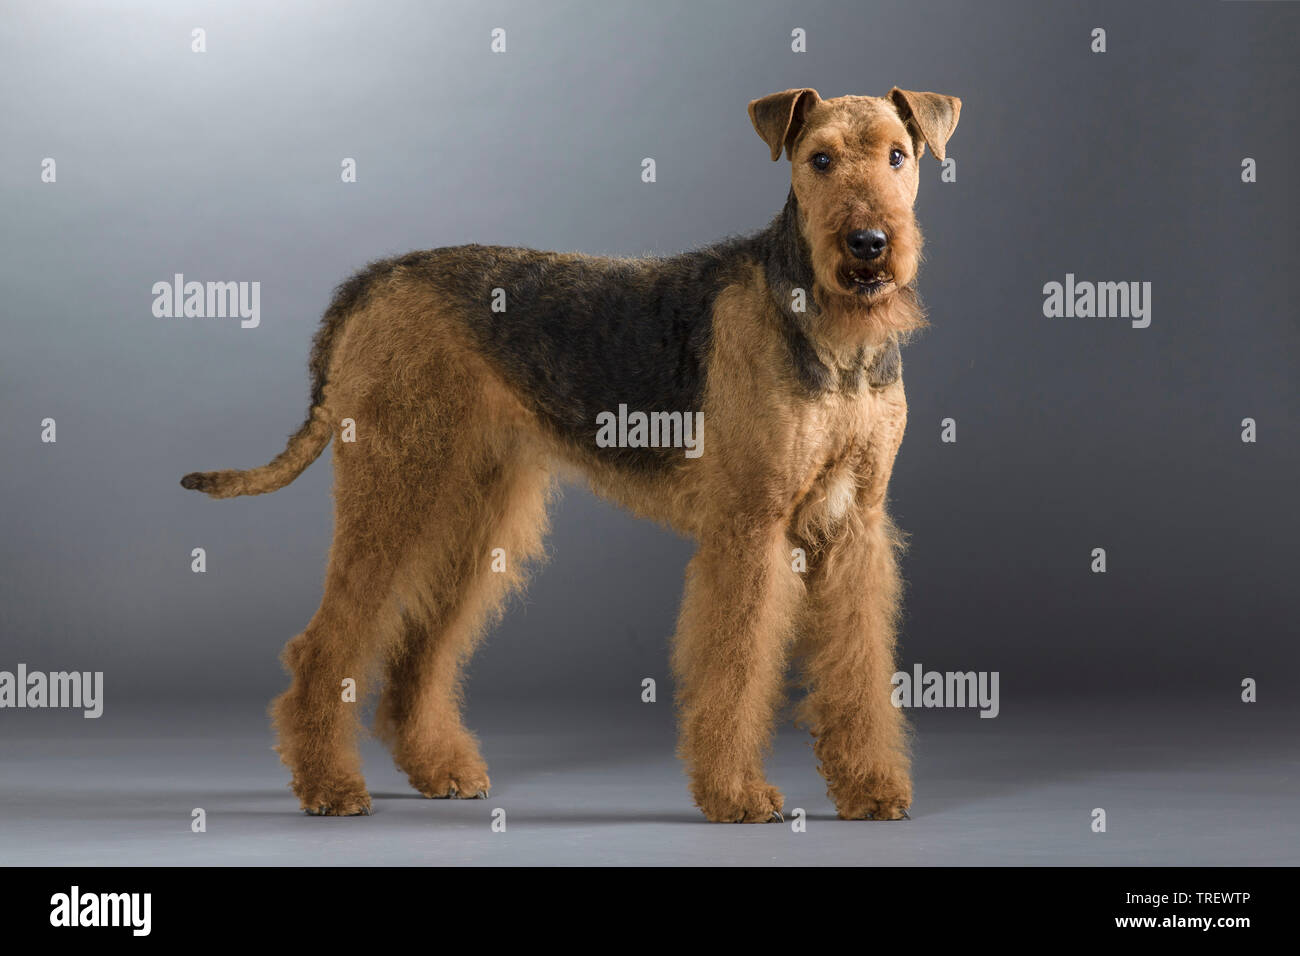 Airedale Terrier. Permanente de adultos. Studio picture contra un fondo gris. Alemania Foto de stock